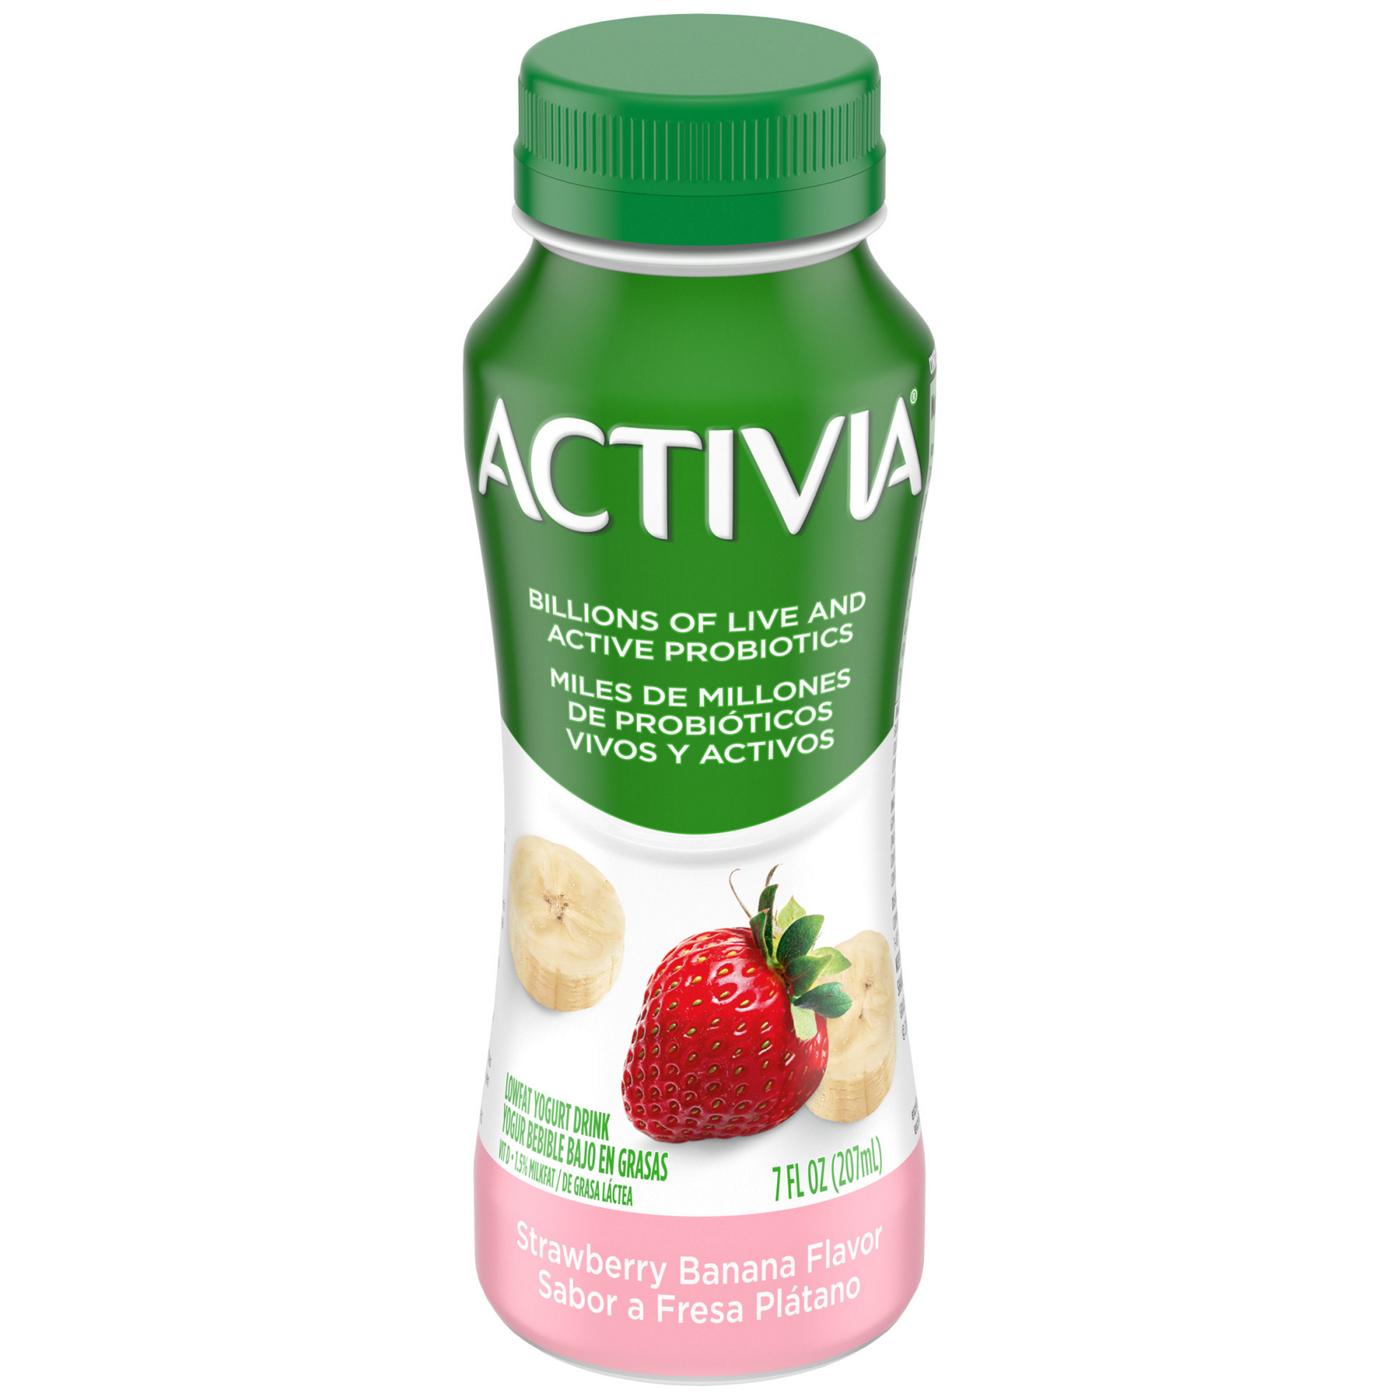 Activia Drinkable Probiotic Strawberry Banana 8 x 93 ml - Voilà